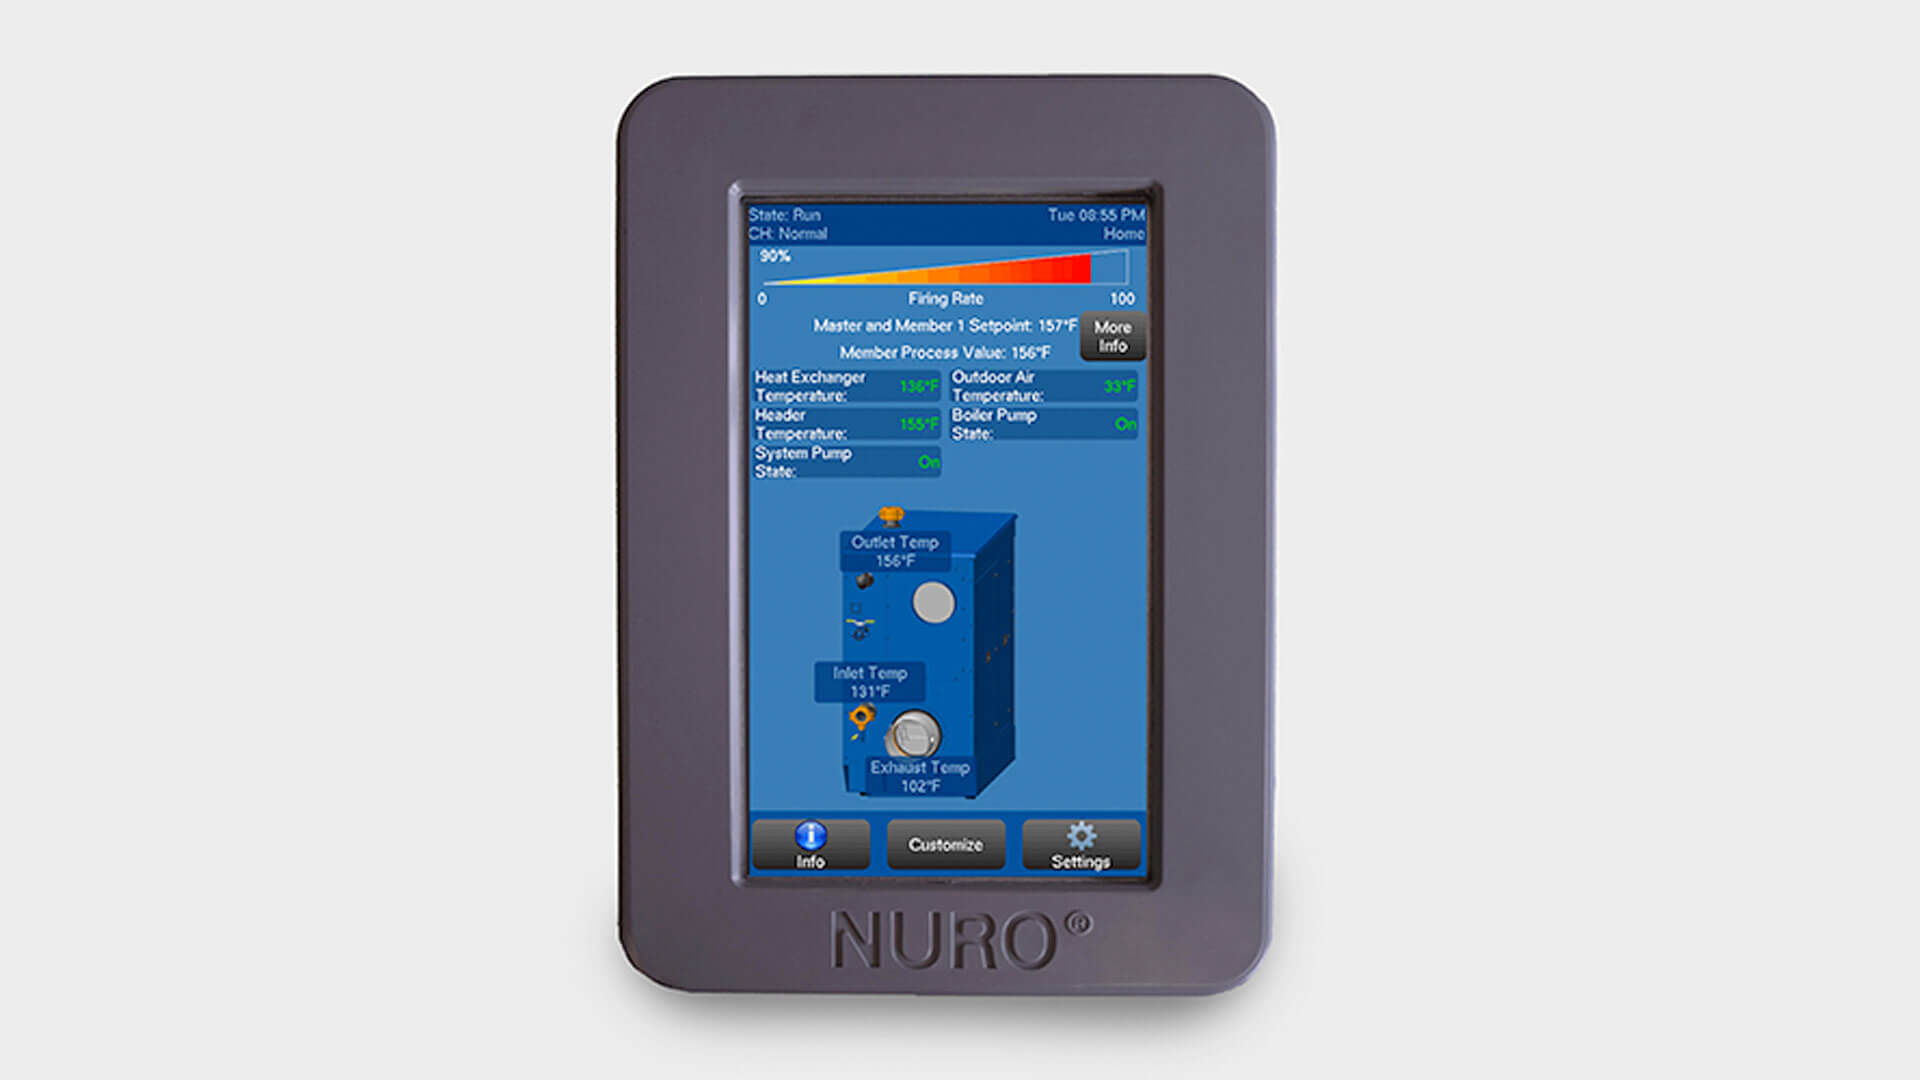 How to Update NURO Software